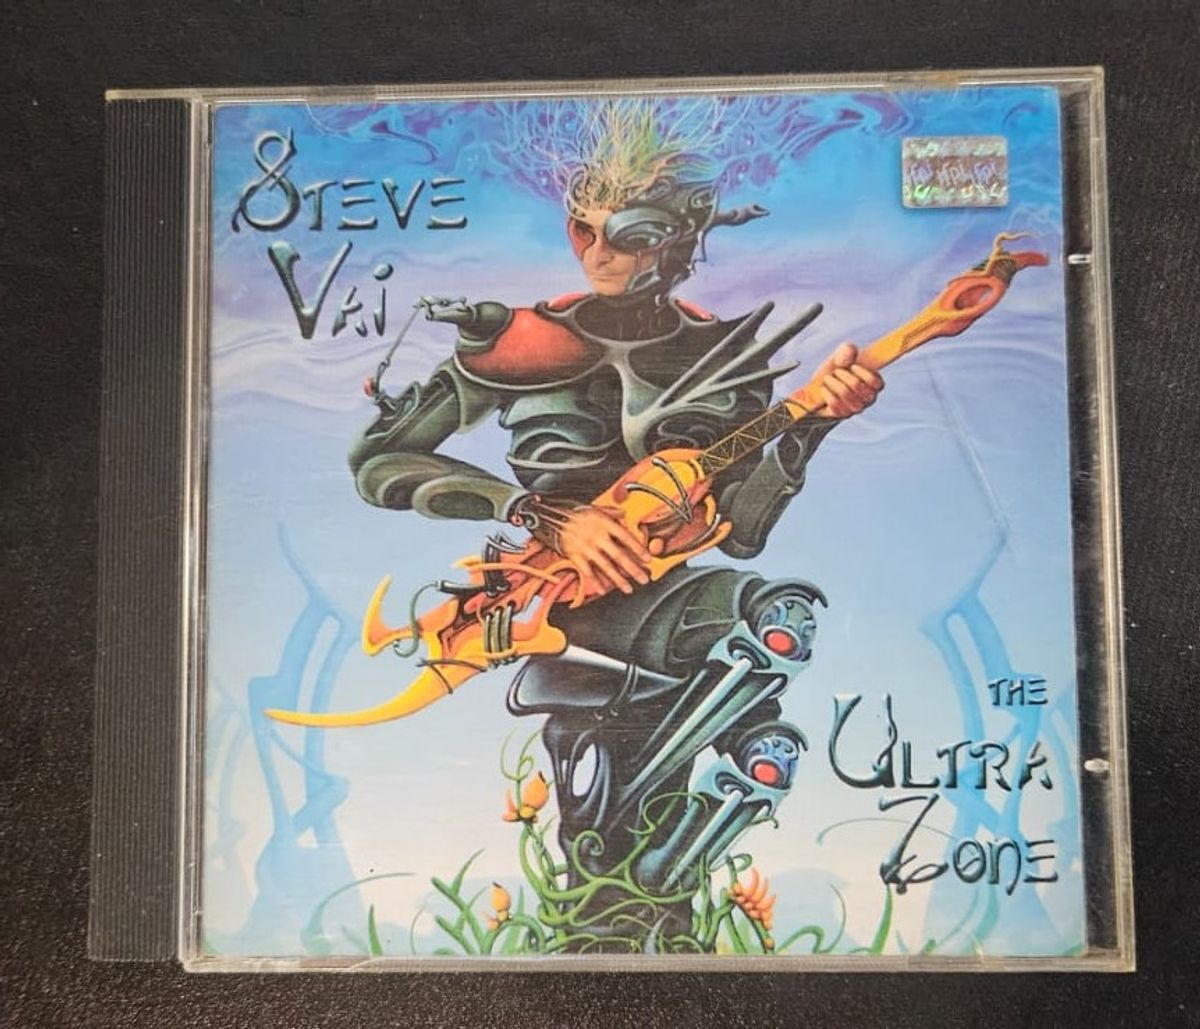 The Ultra Zone CD – Steve Vai